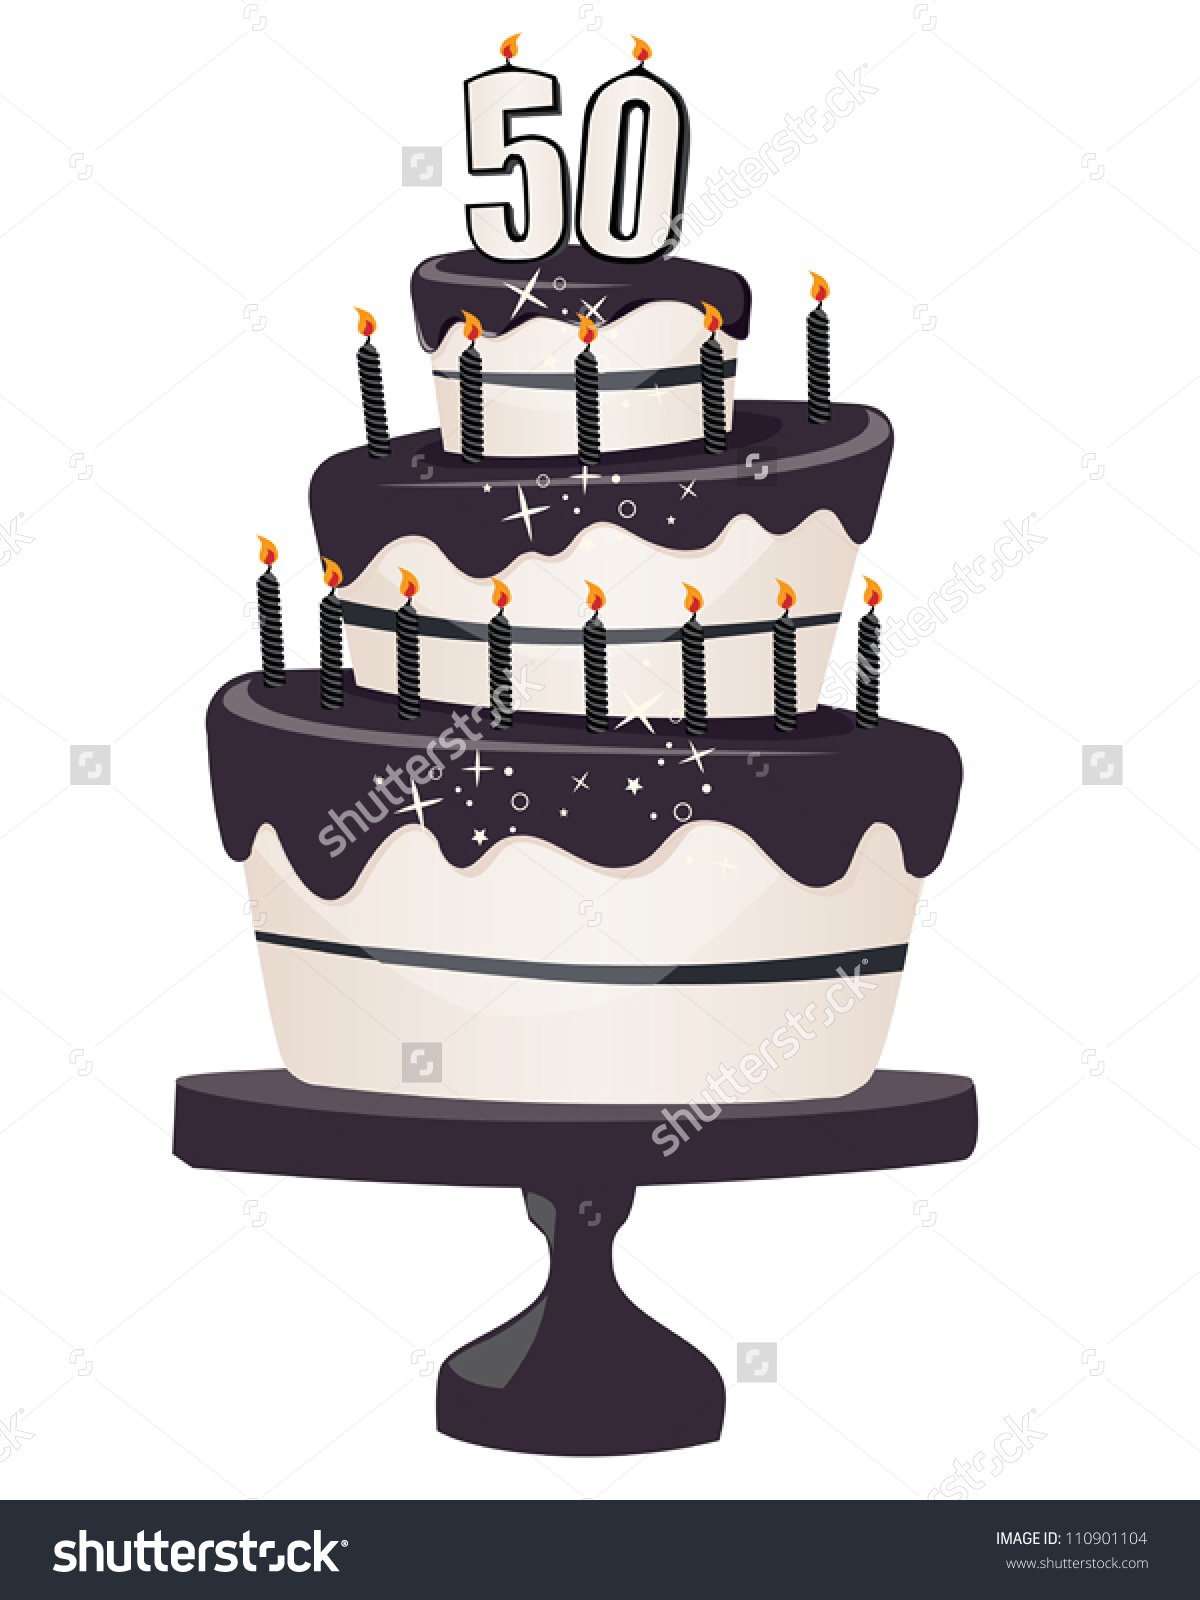 50th birthday cake clipart